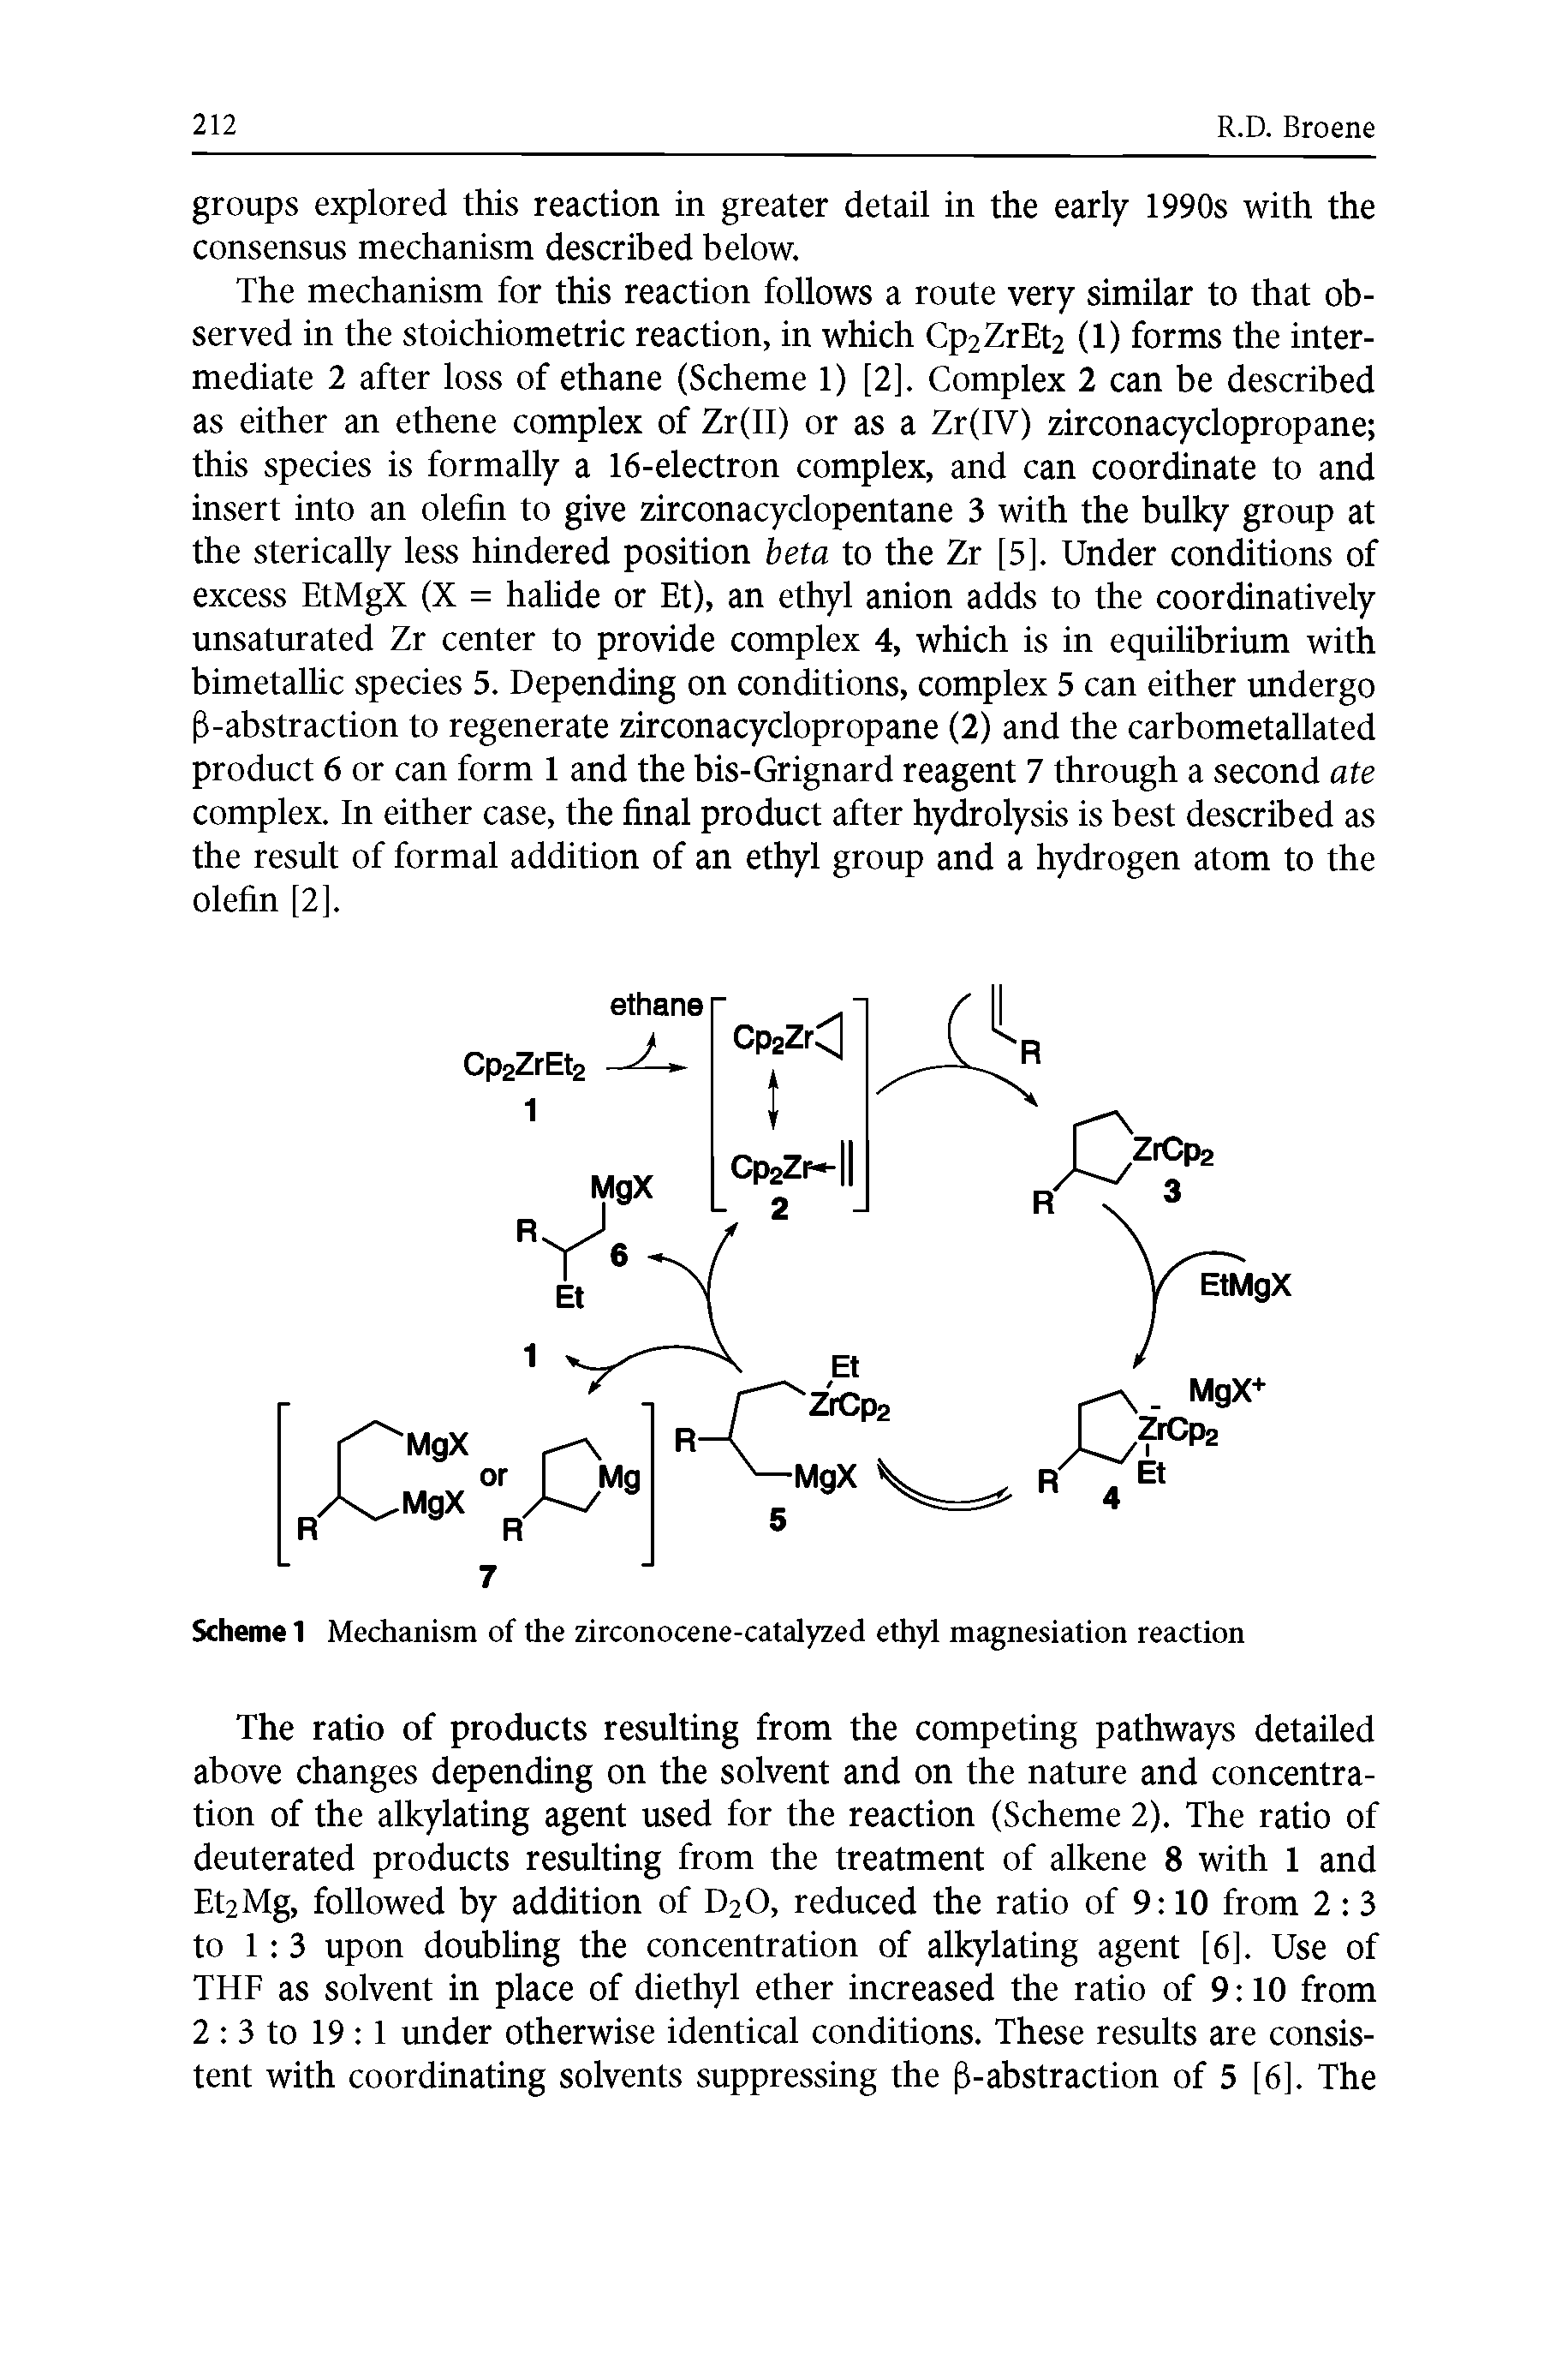 Scheme 1 Mechanism of the zirconocene-catalyzed ethyl magnesiation reaction...